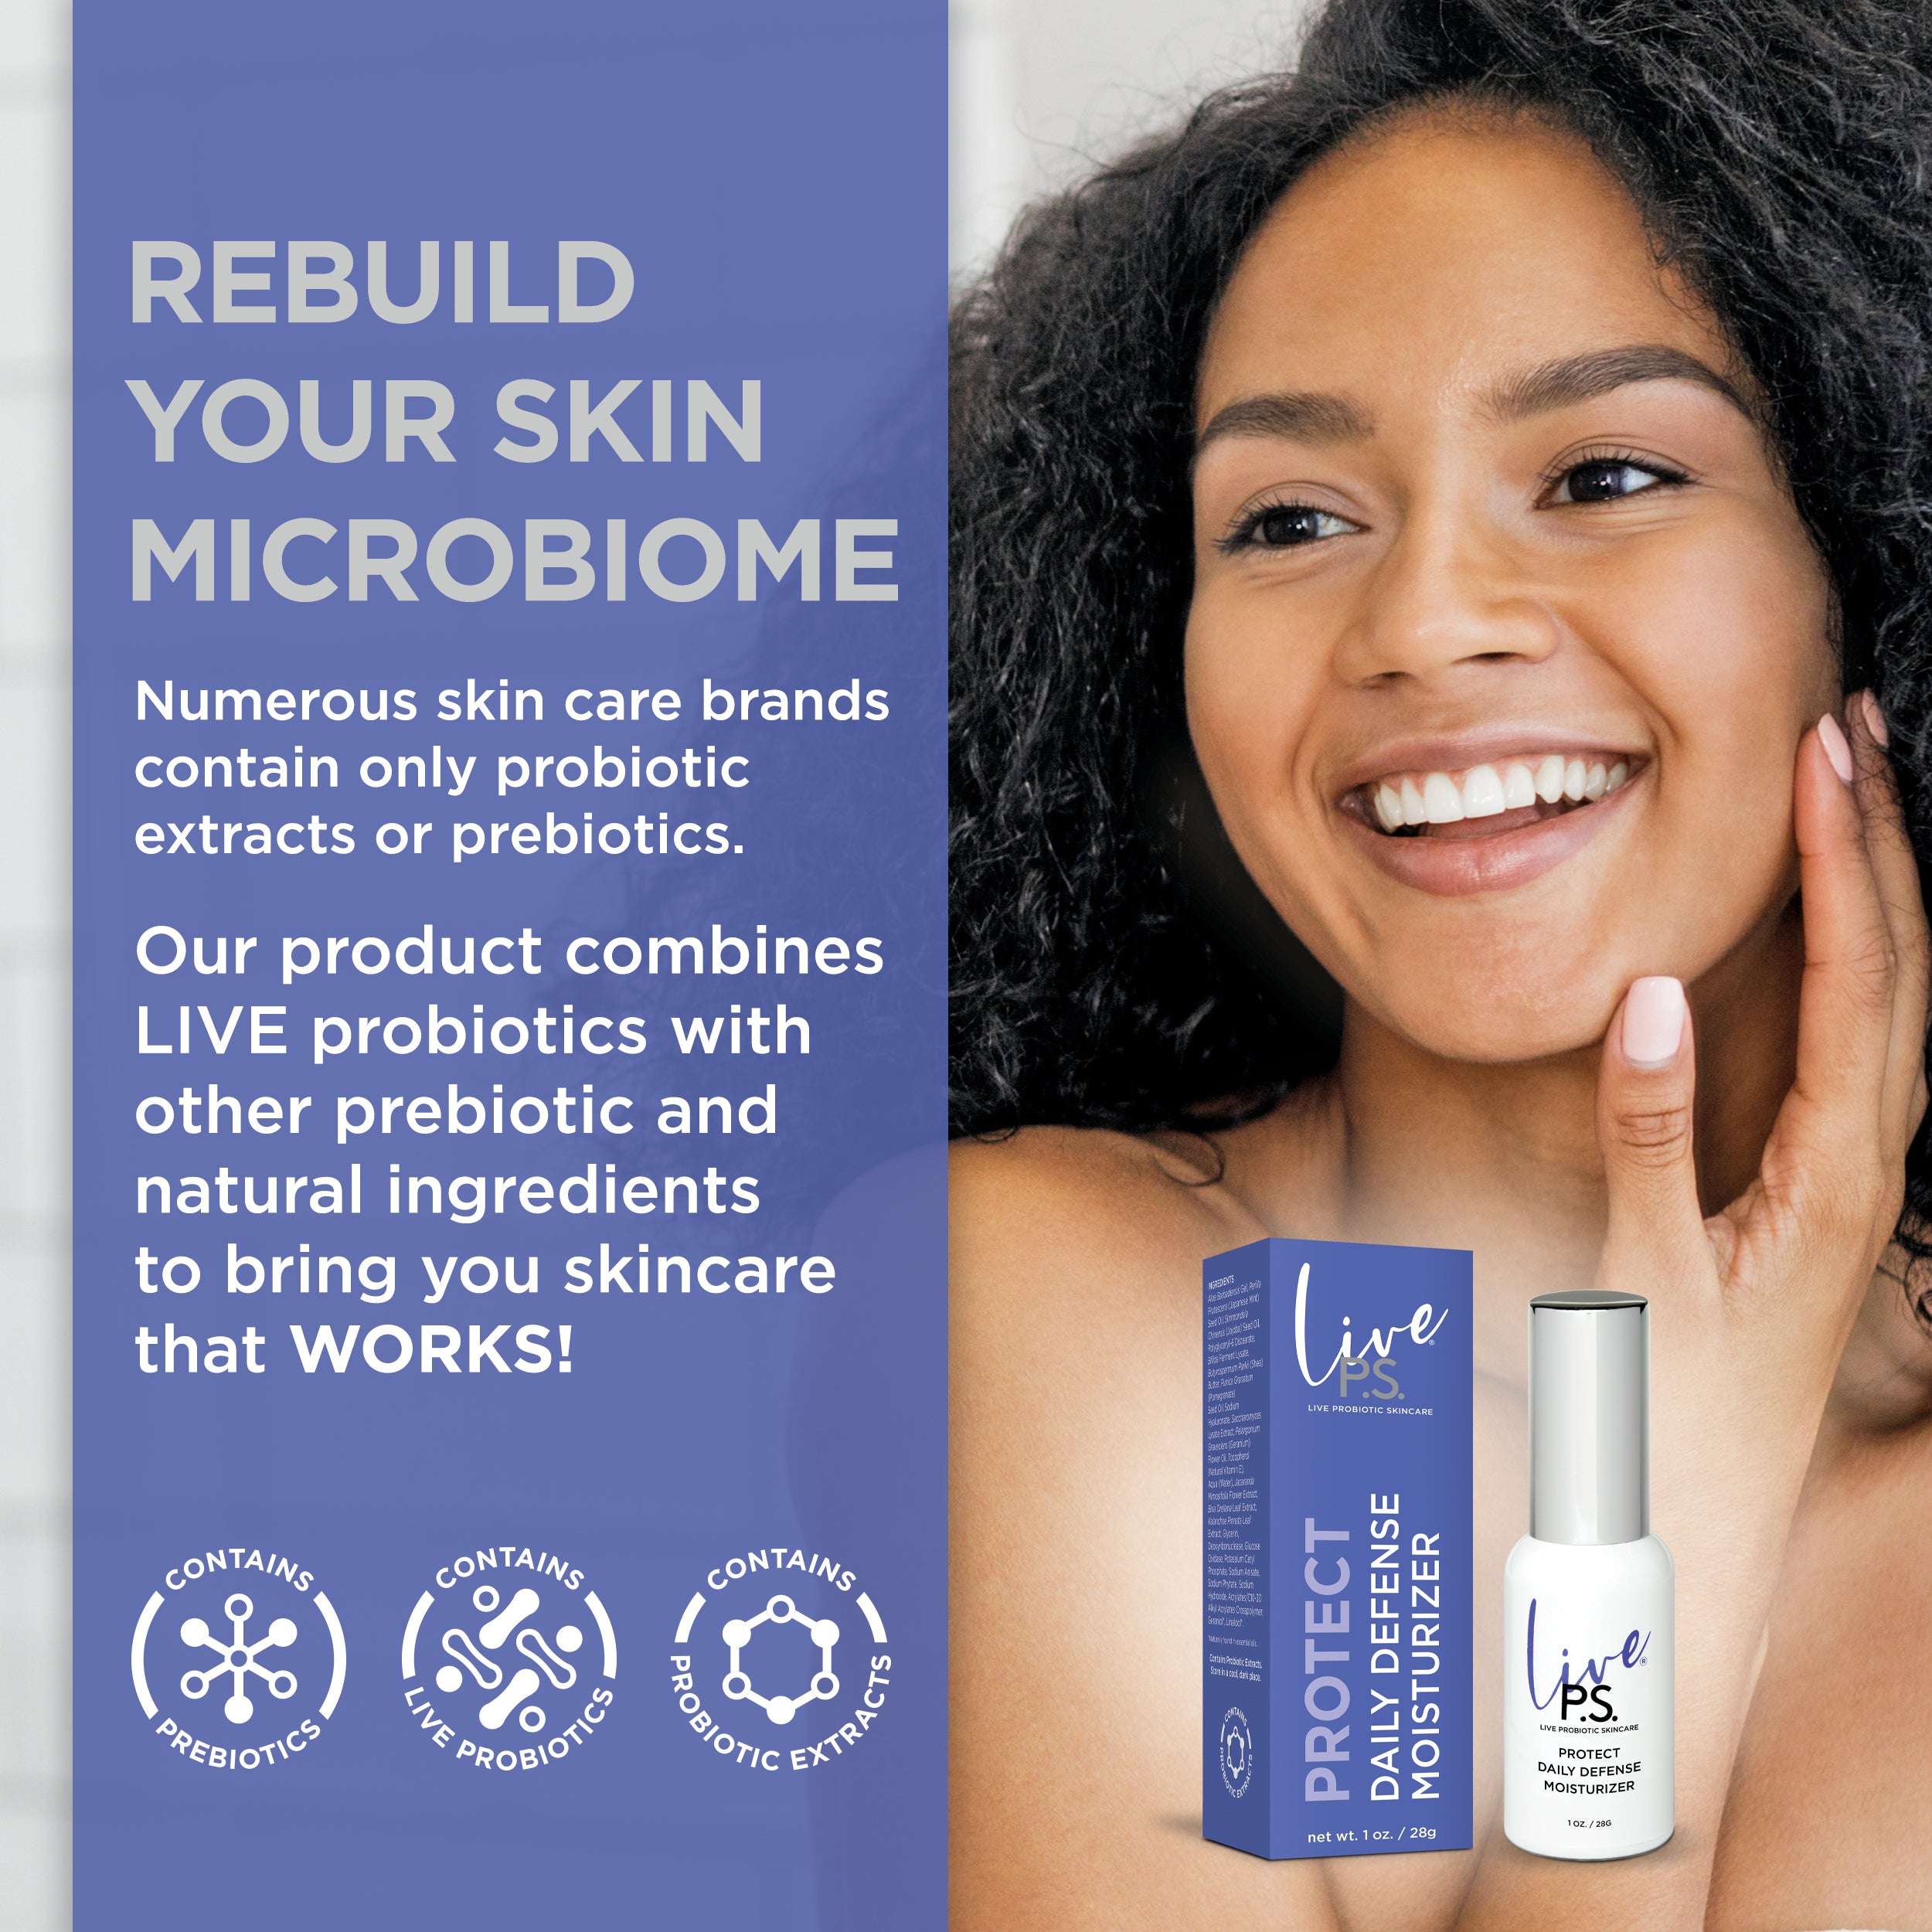 microbiome friendly skincare